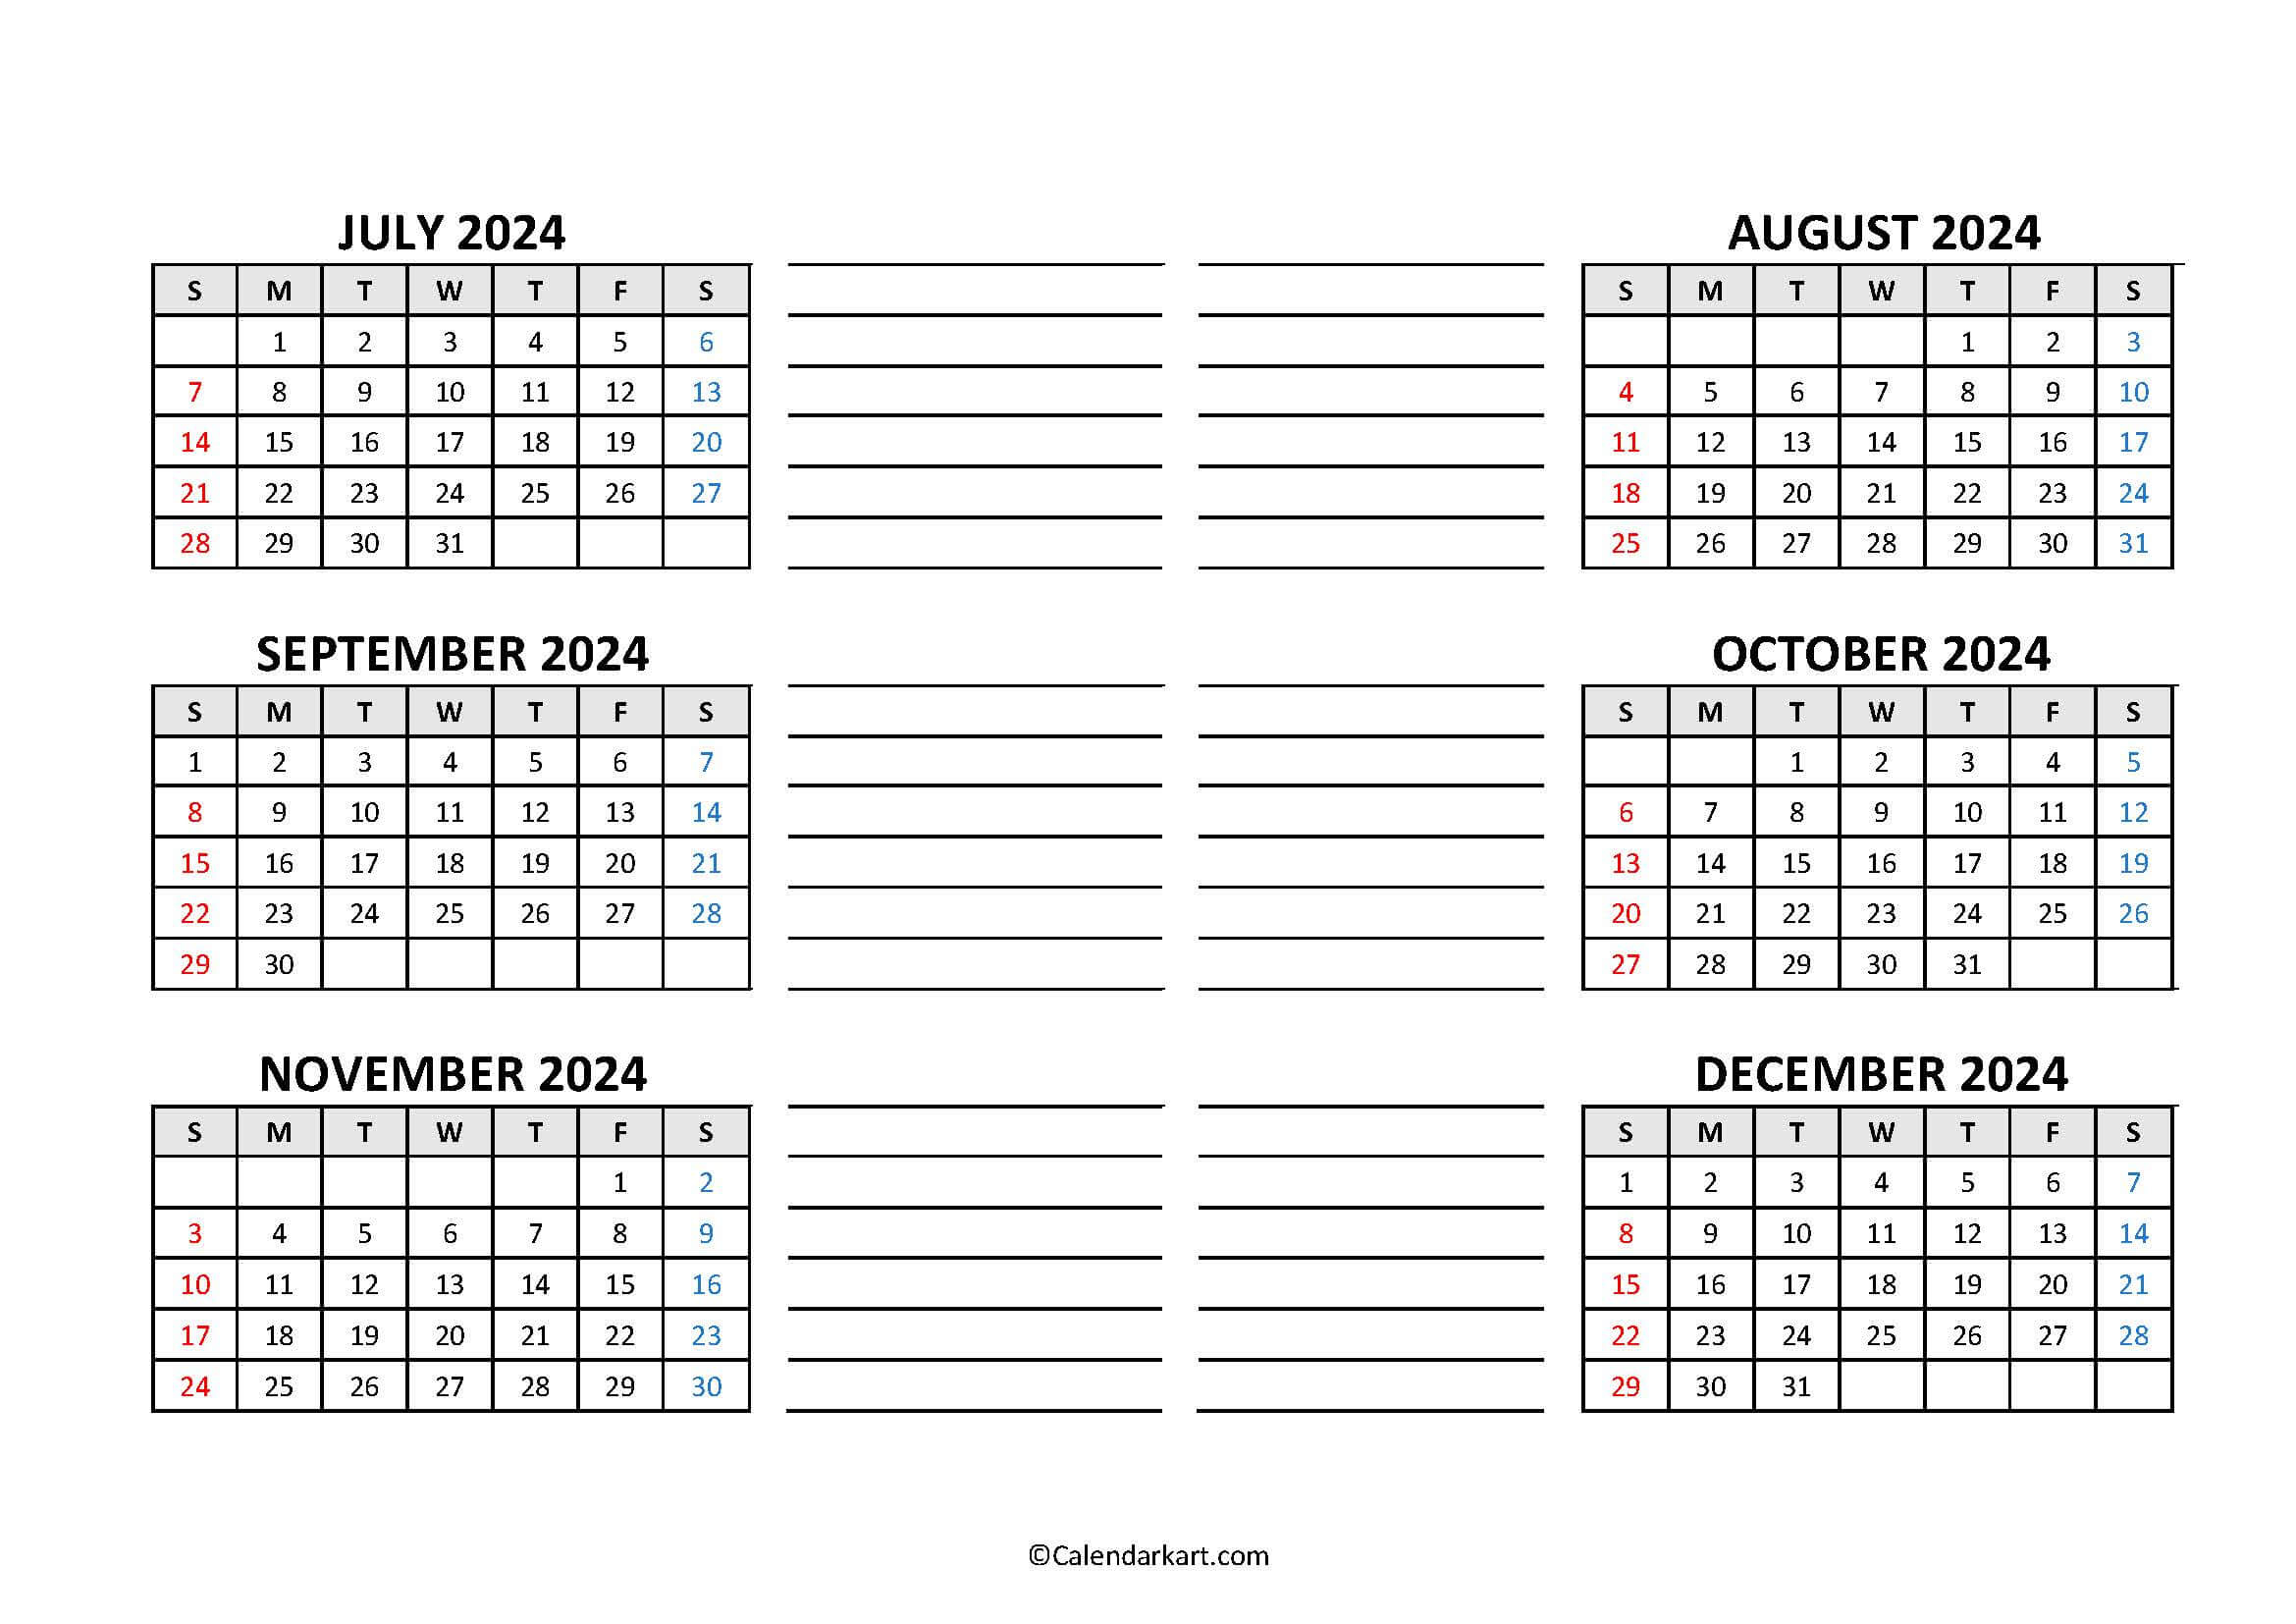 Free Printable Year At A Glance Calendar 2024 - Calendarkart | July To December 2024 Calendar Printable